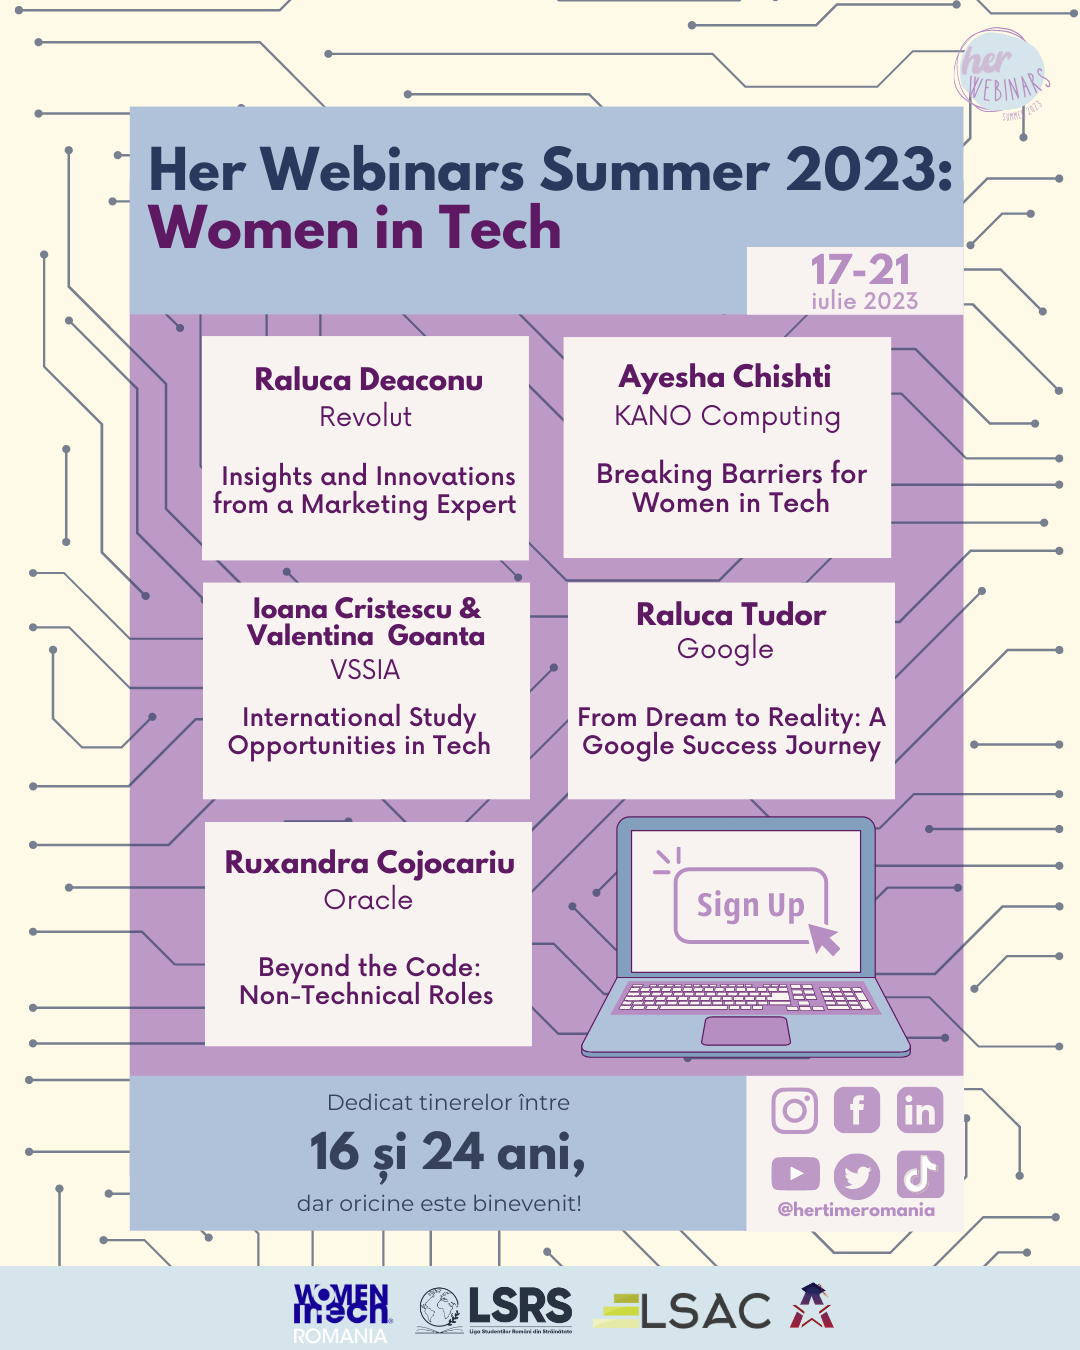 HerWebinars Summer 2023 - Tech Edition